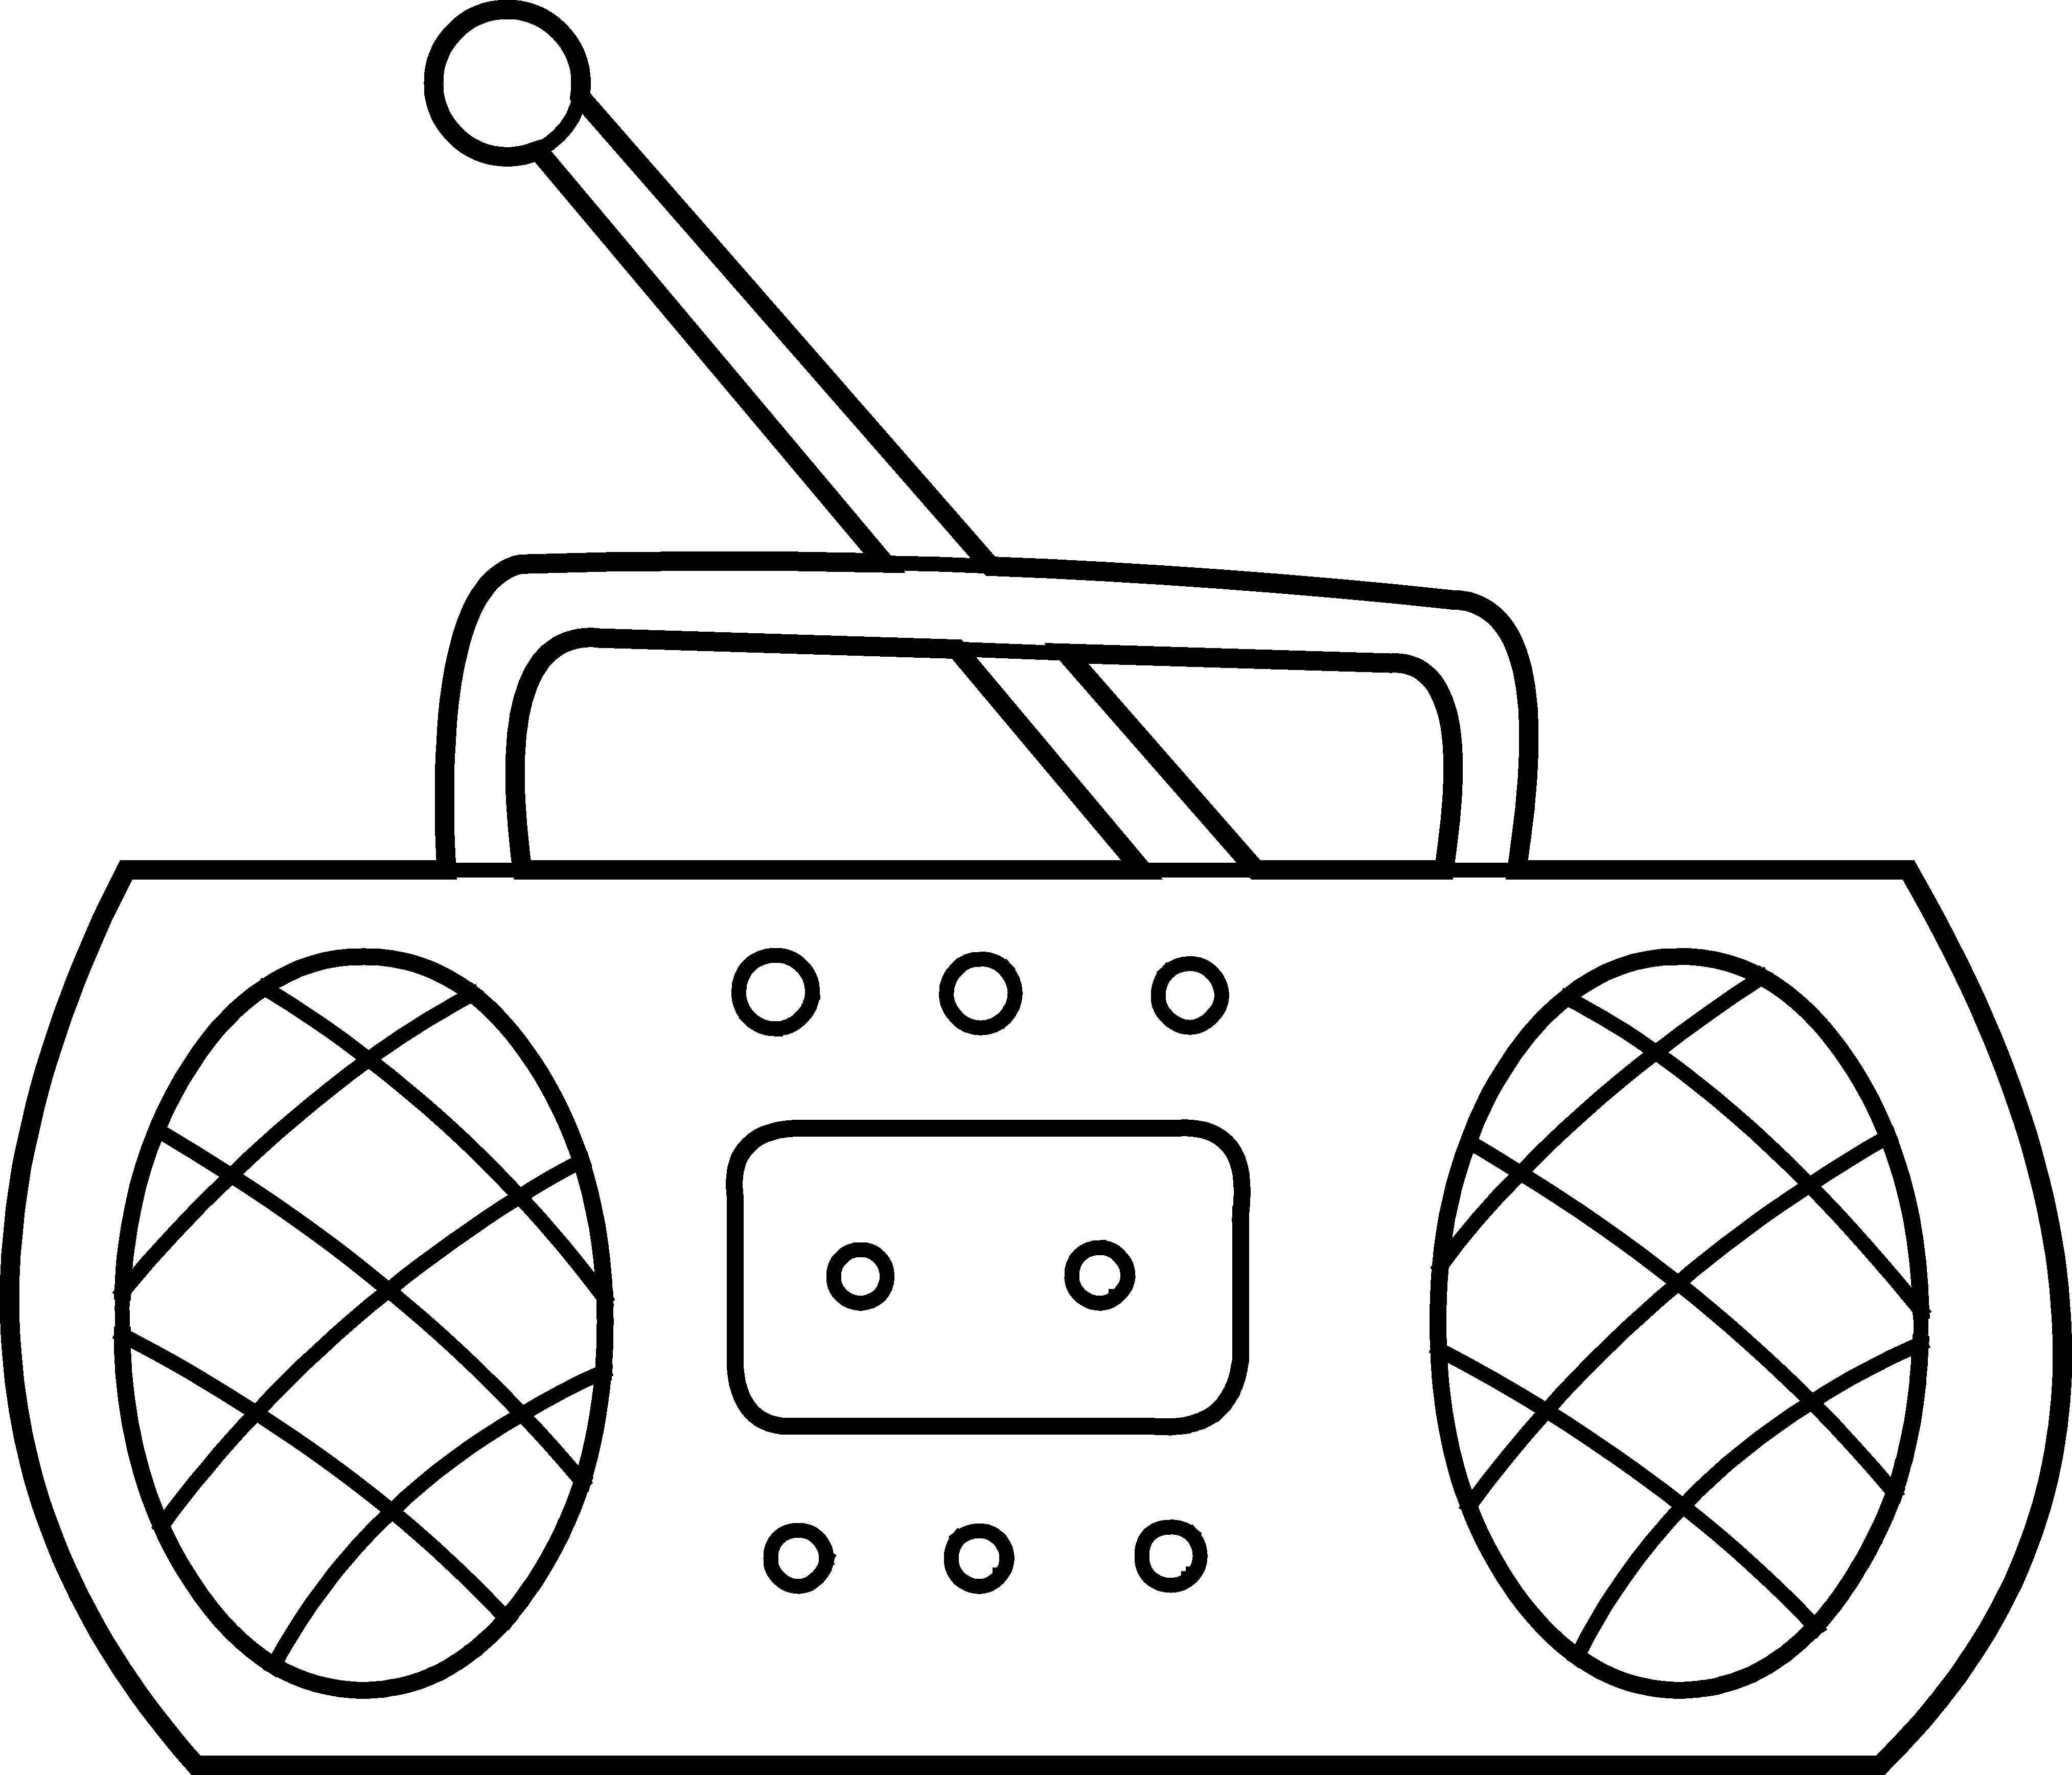 A White And Black Radio